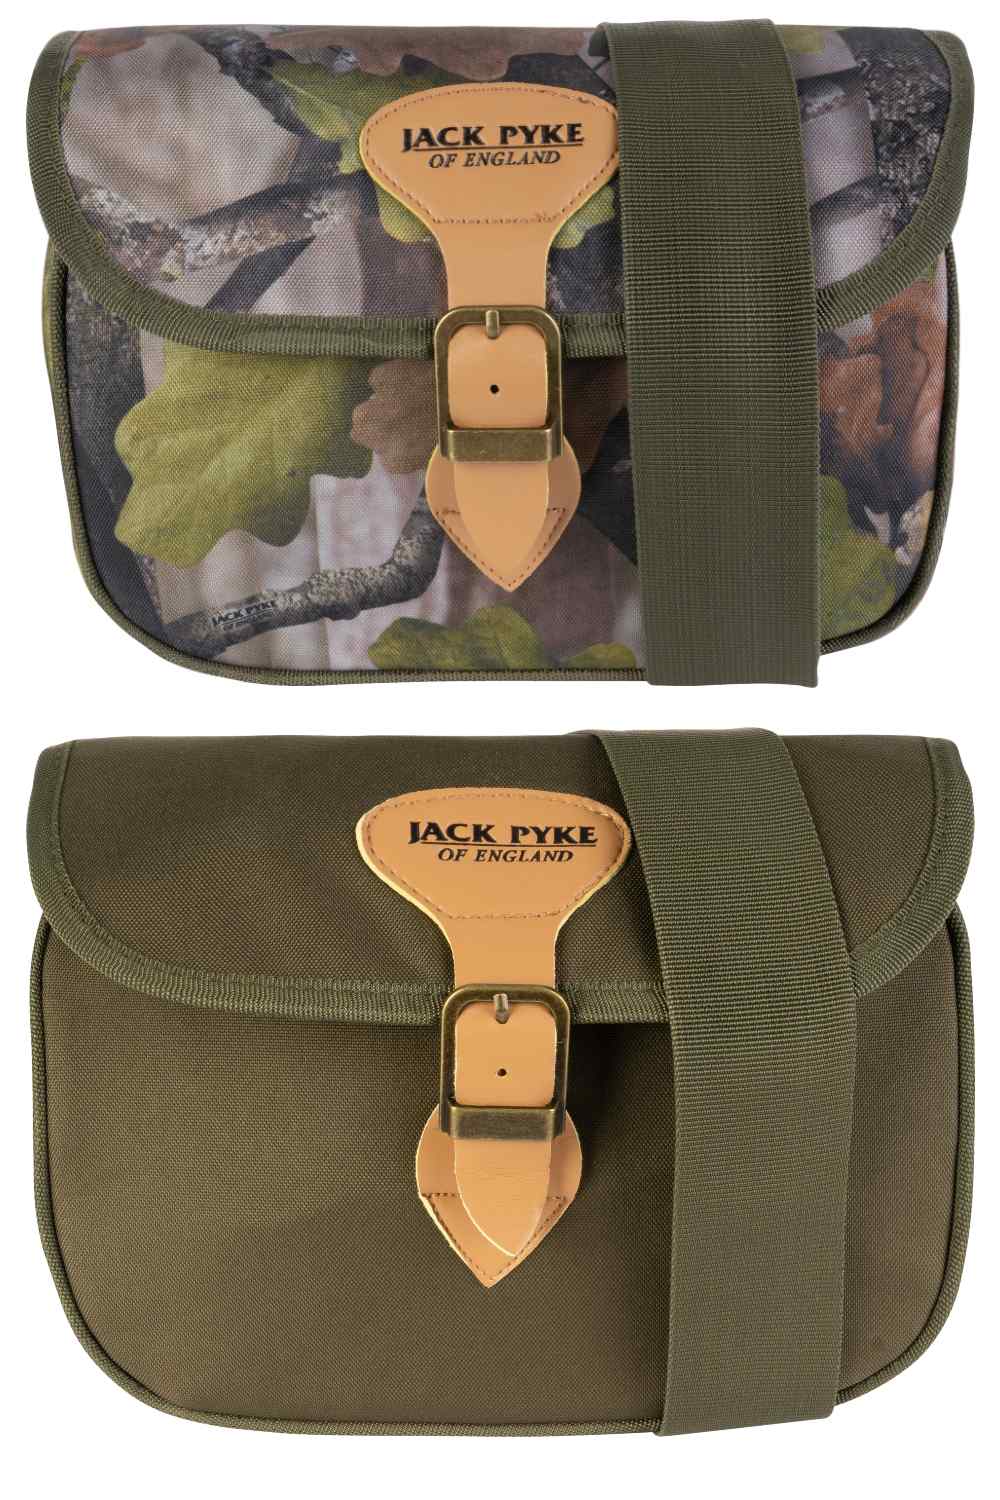 Jack Pyke Speed Loader Cartridge Bag in Evo and Green 